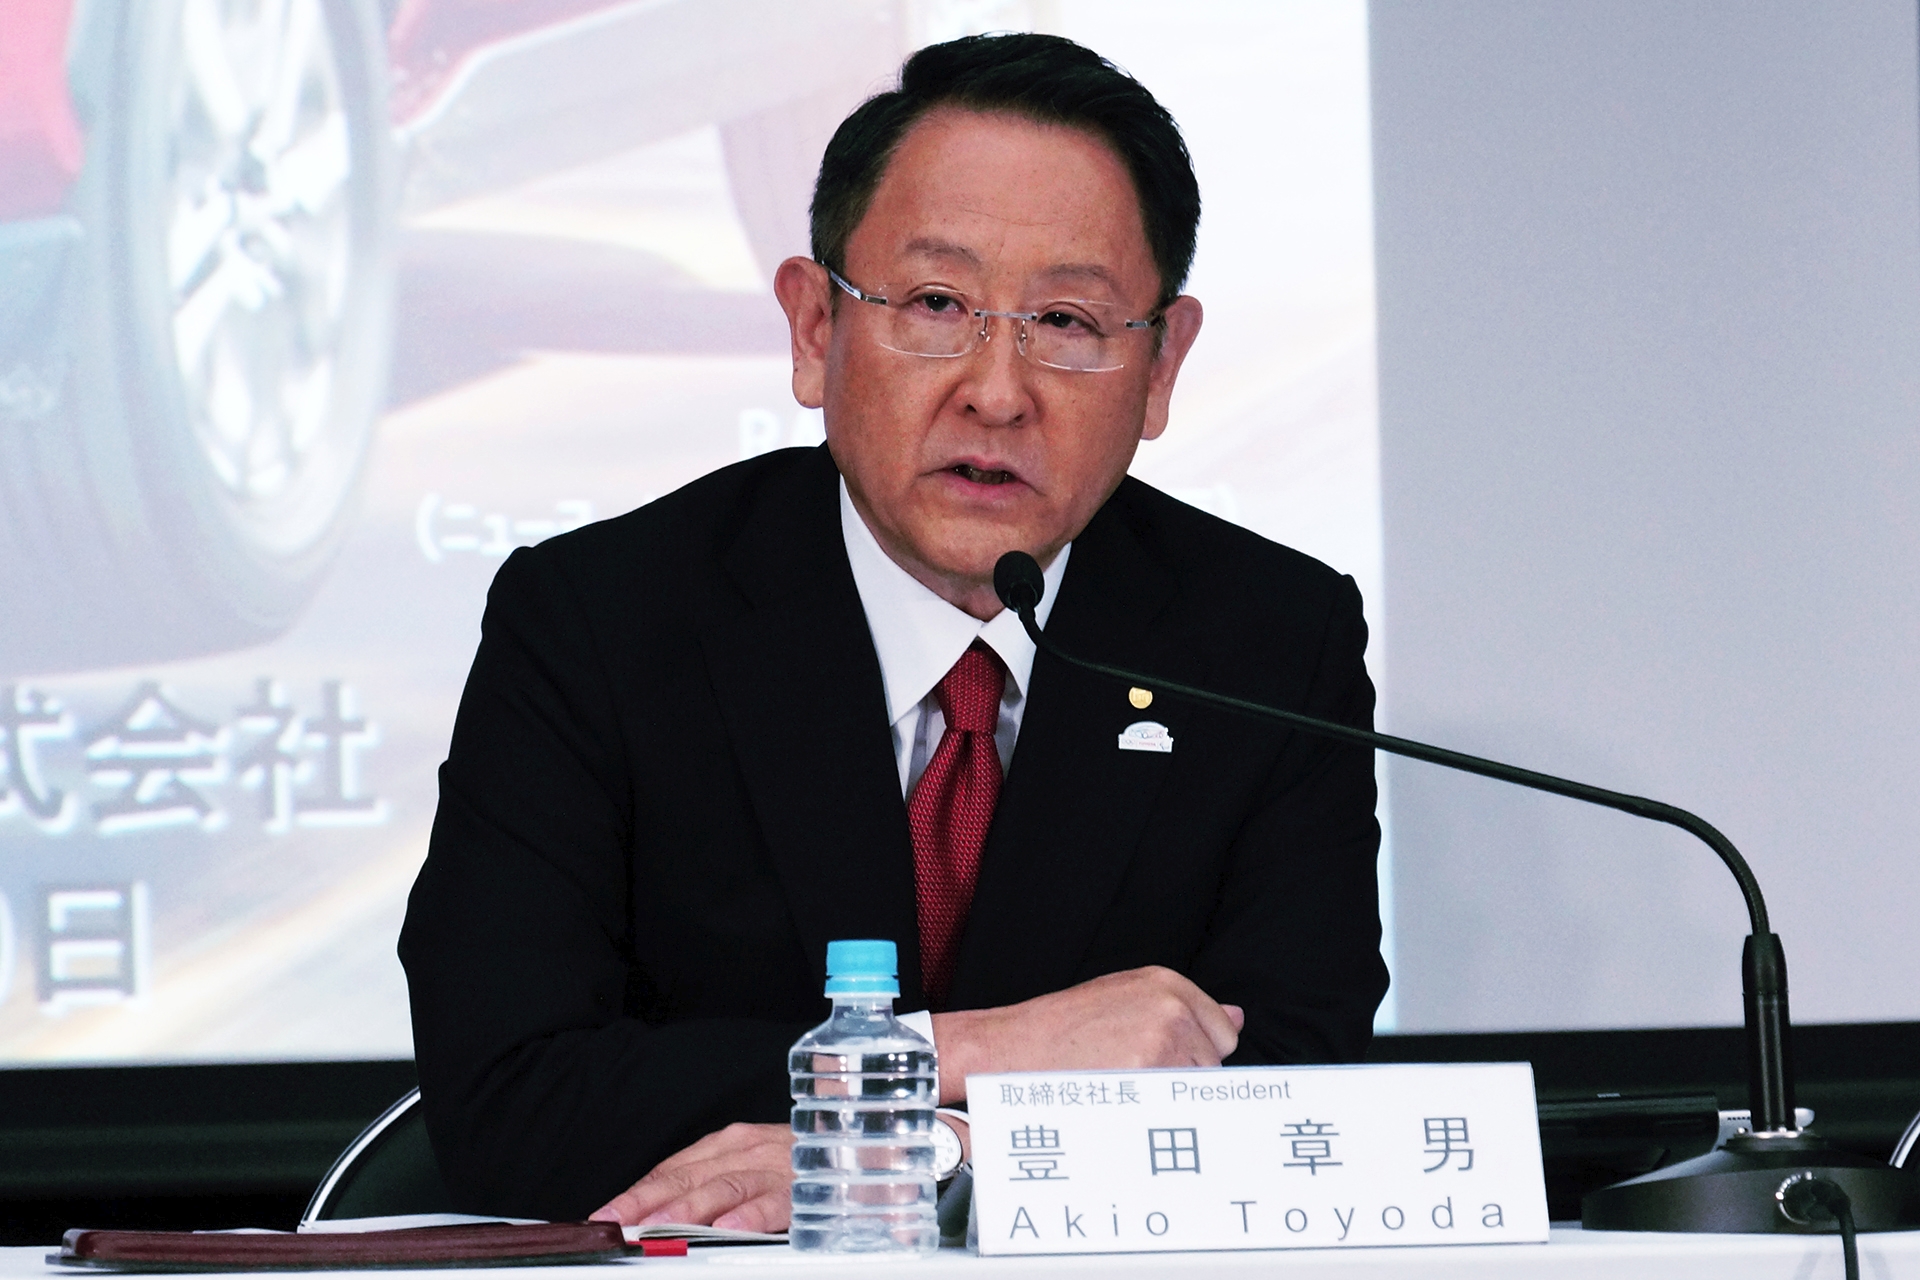 Presiden Toyota tak suka peralihan kereta elektrik – kereta jadi mahal, karbon dioksida makin tinggi